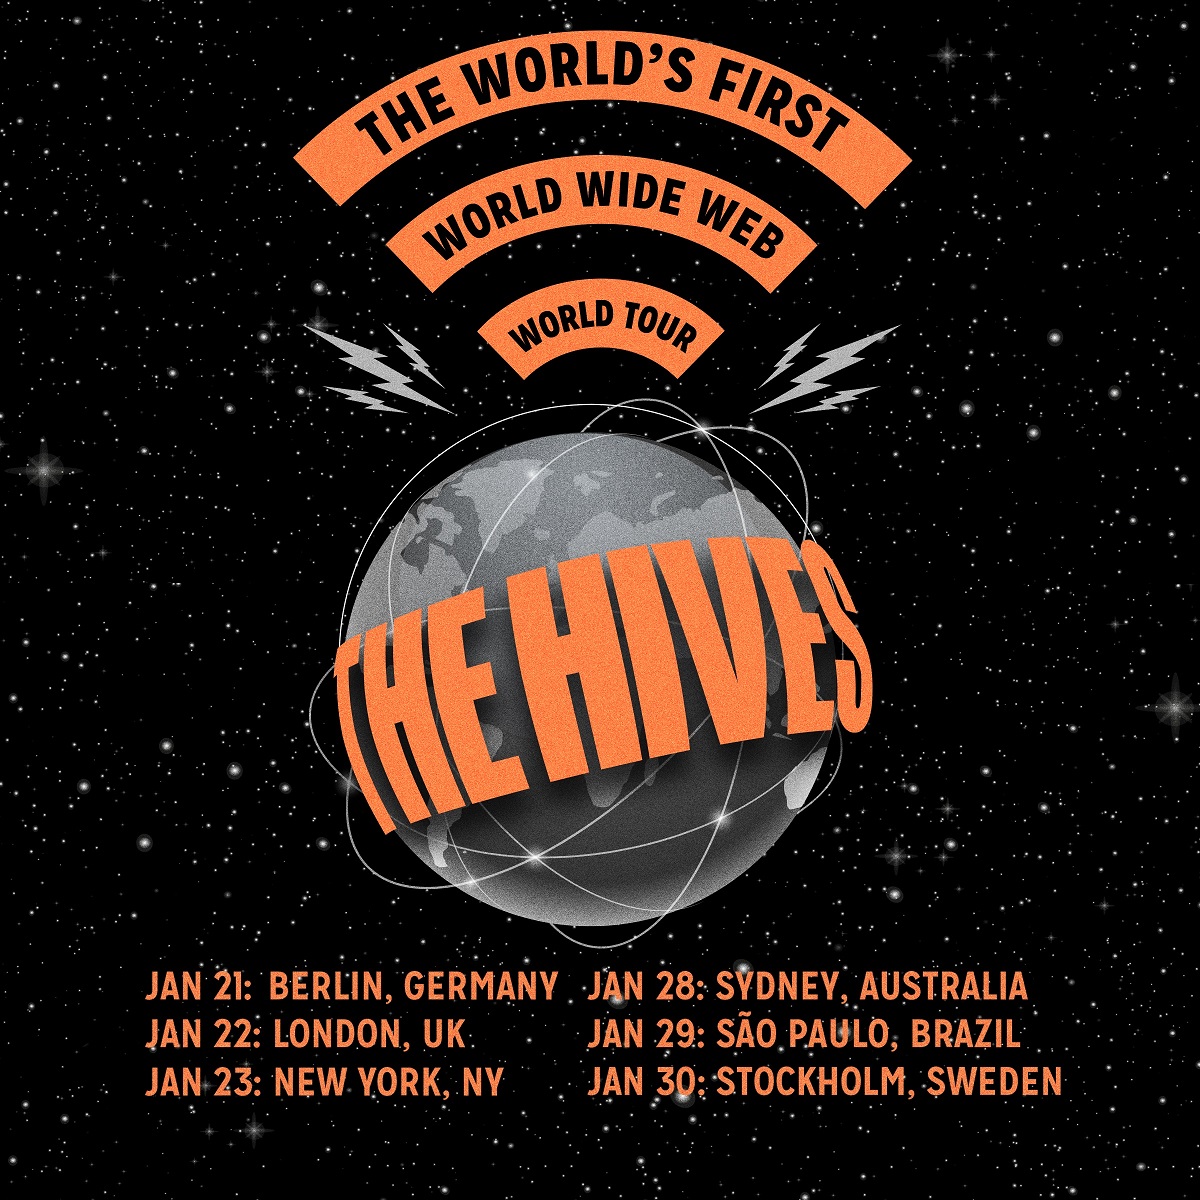 The Hives, la banda de rock sueca, ha anunciado hoy su primera gira virtual, The World's First World Wide Web World Tour